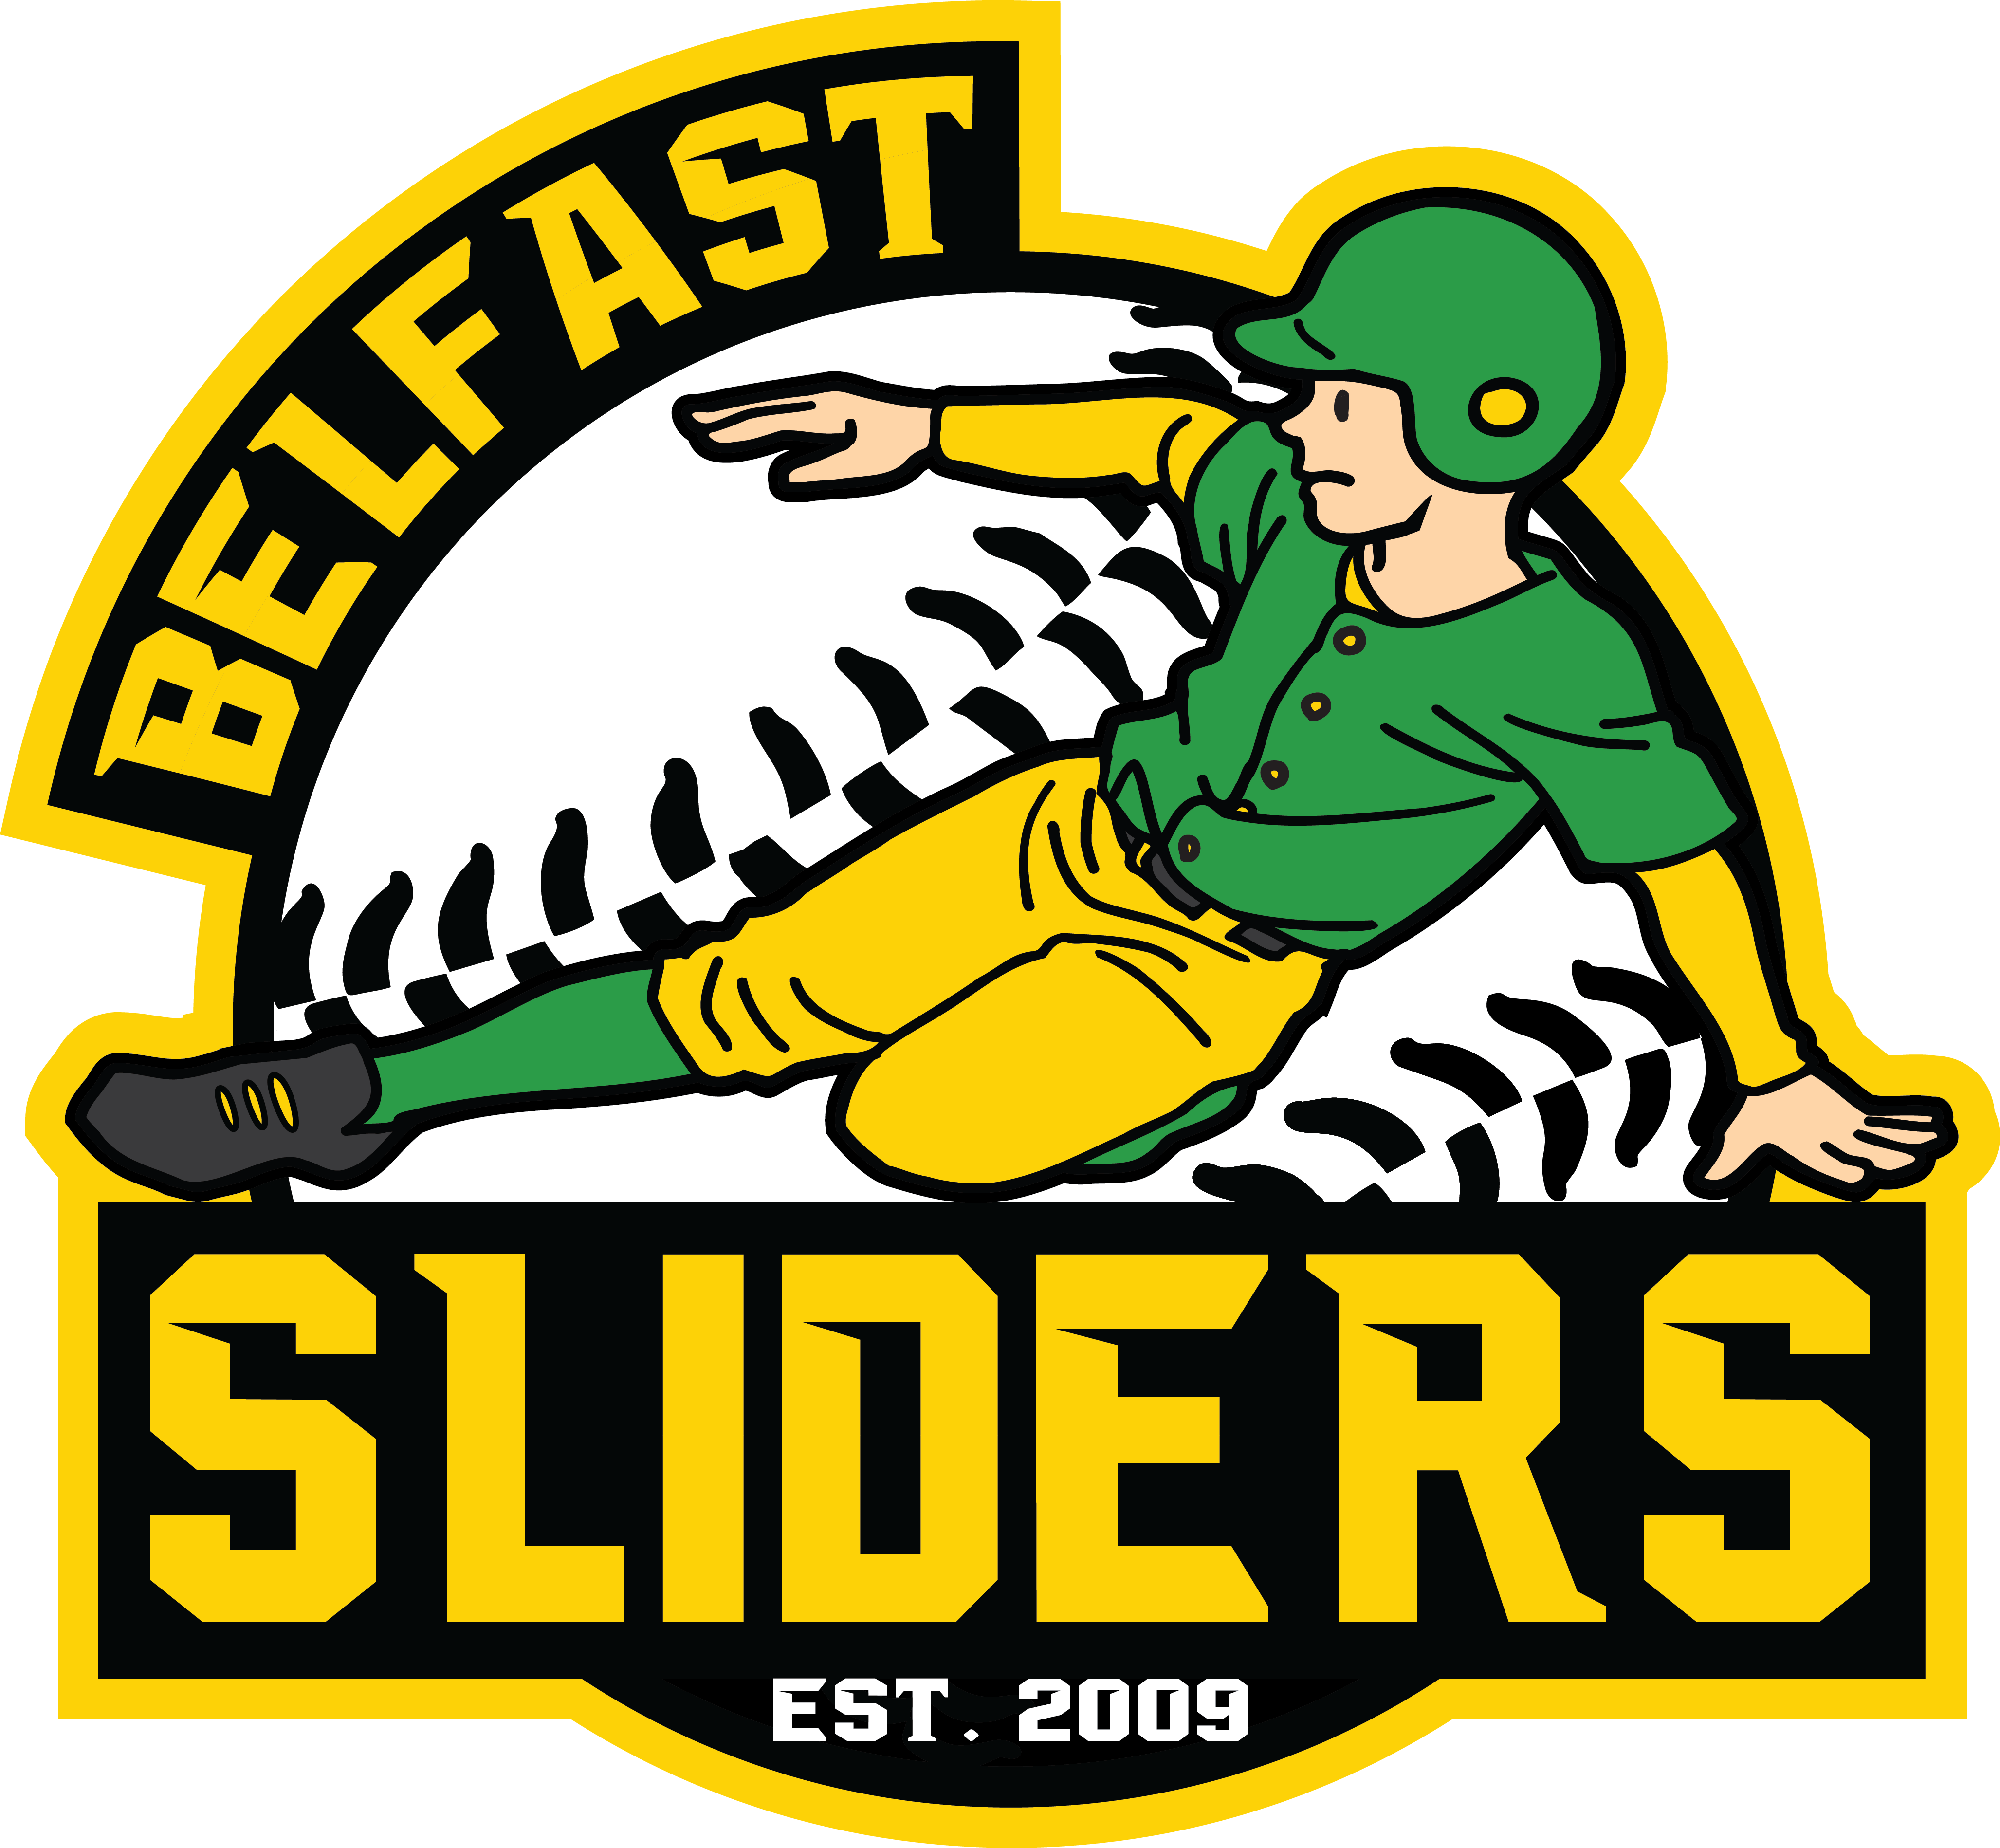 Belfast Sliders Softball Club